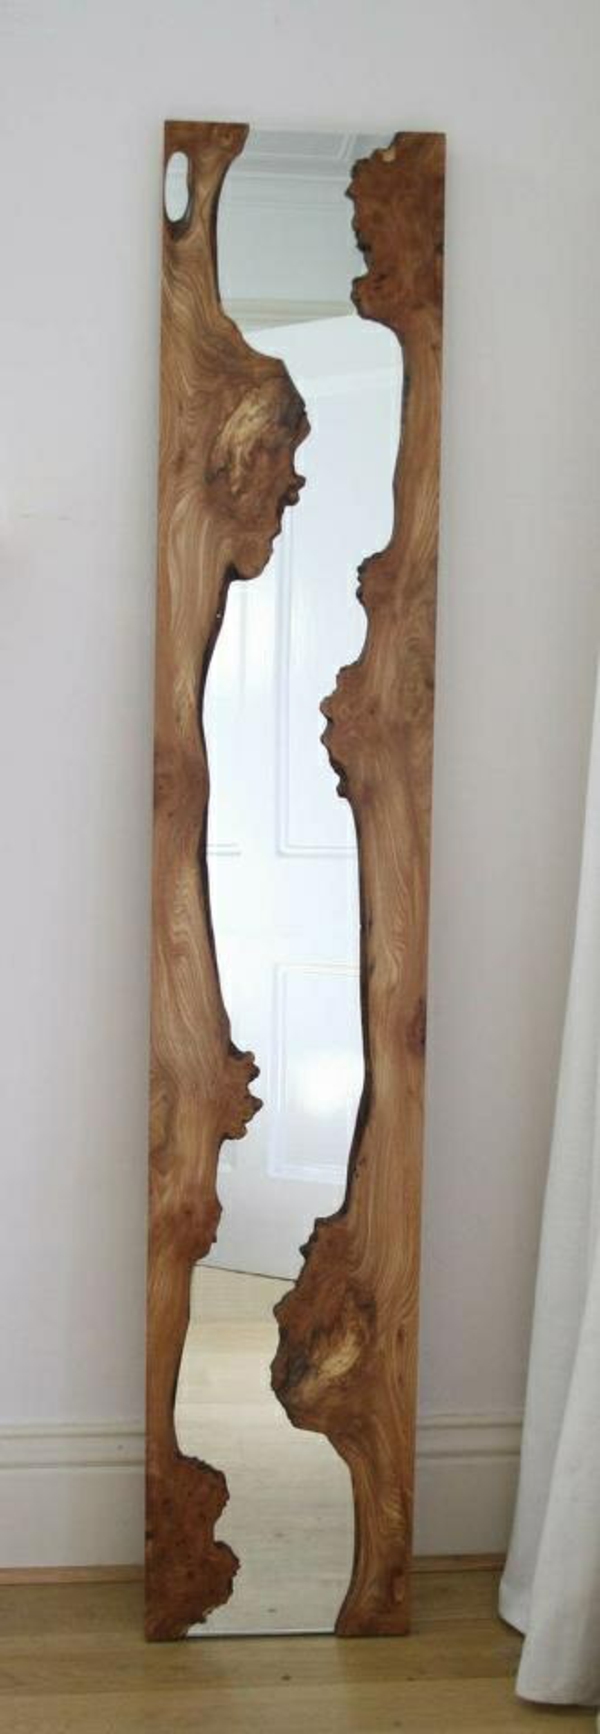 Wanddeko aus Holz flur wandgestaltung spiegel holzrahmen